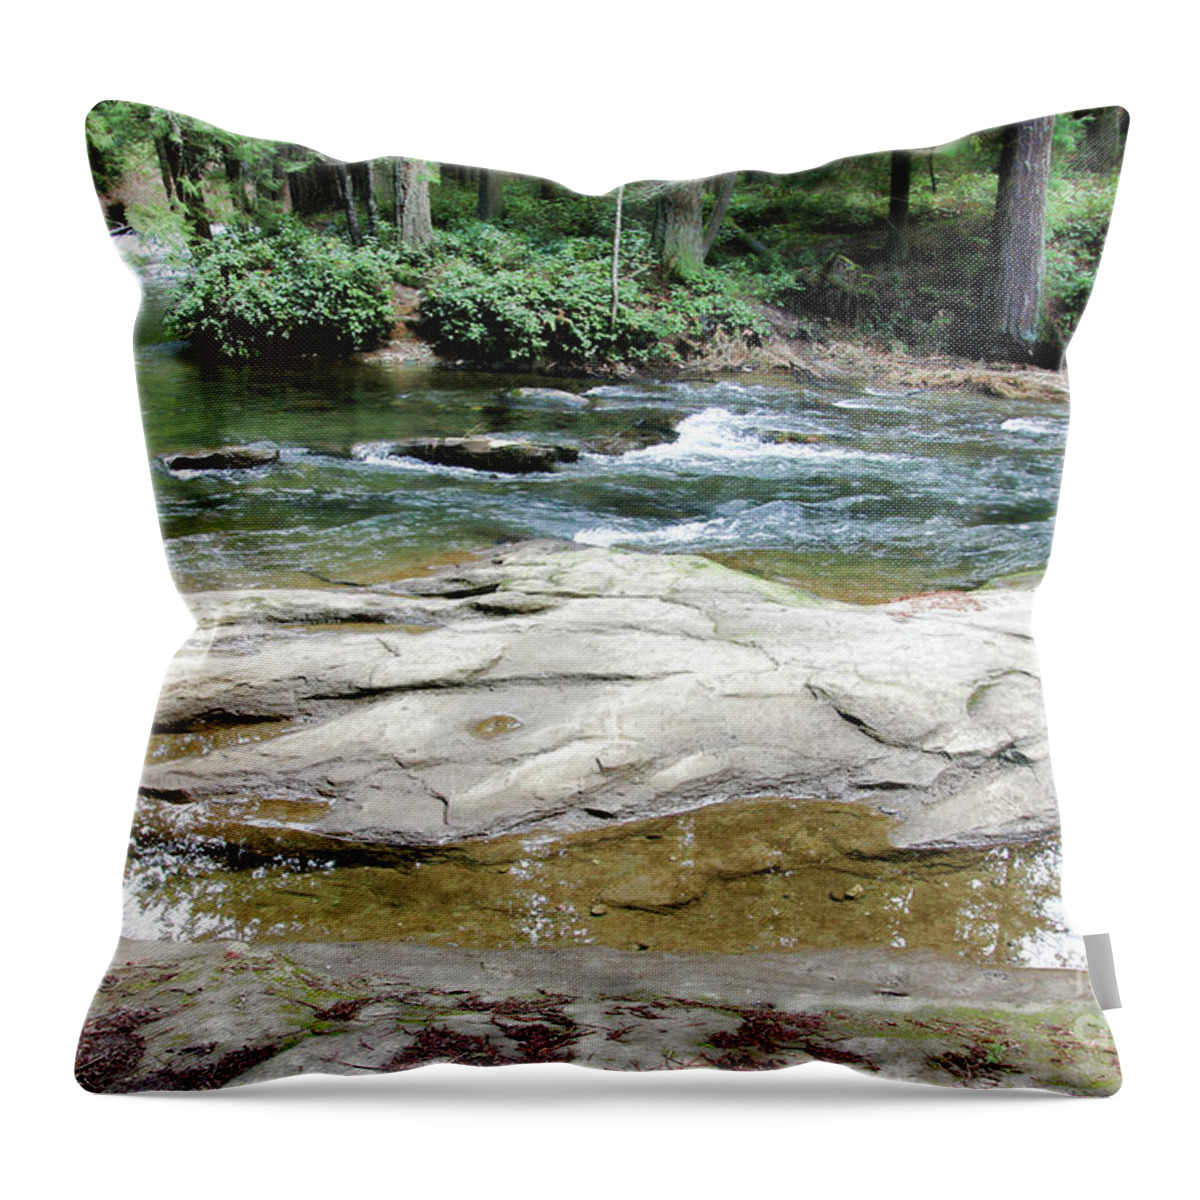 Whatcom Creek Throw Pillow featuring the photograph Pretty Whatcom Creek by Cheryl Rose